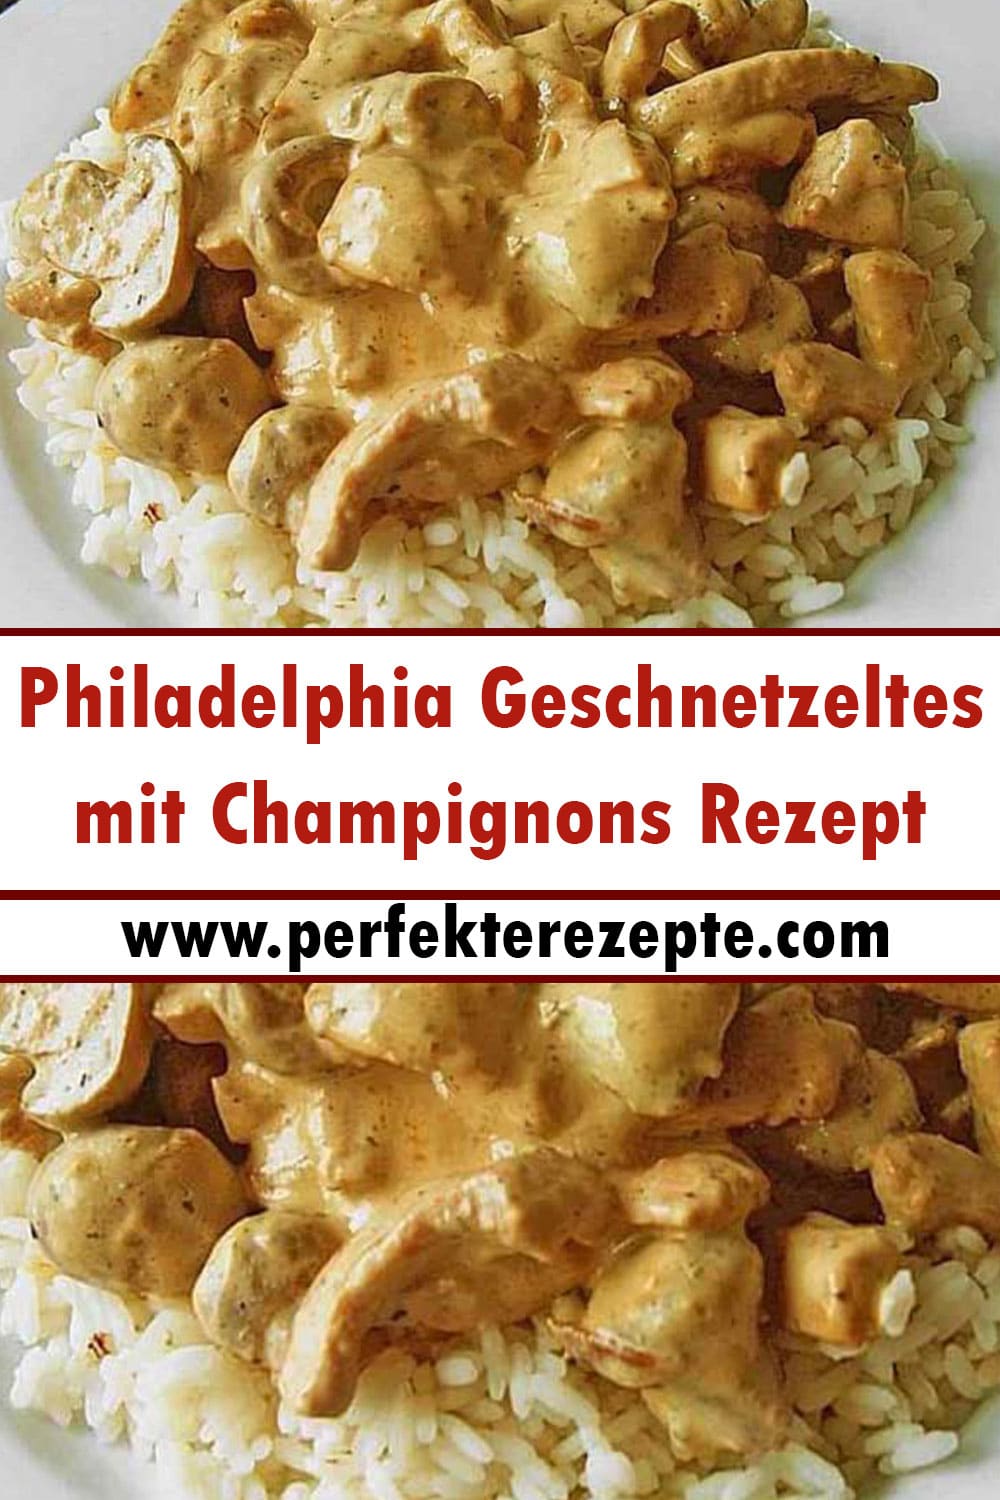 Philadelphia Geschnetzeltes mit Champignons Rezept